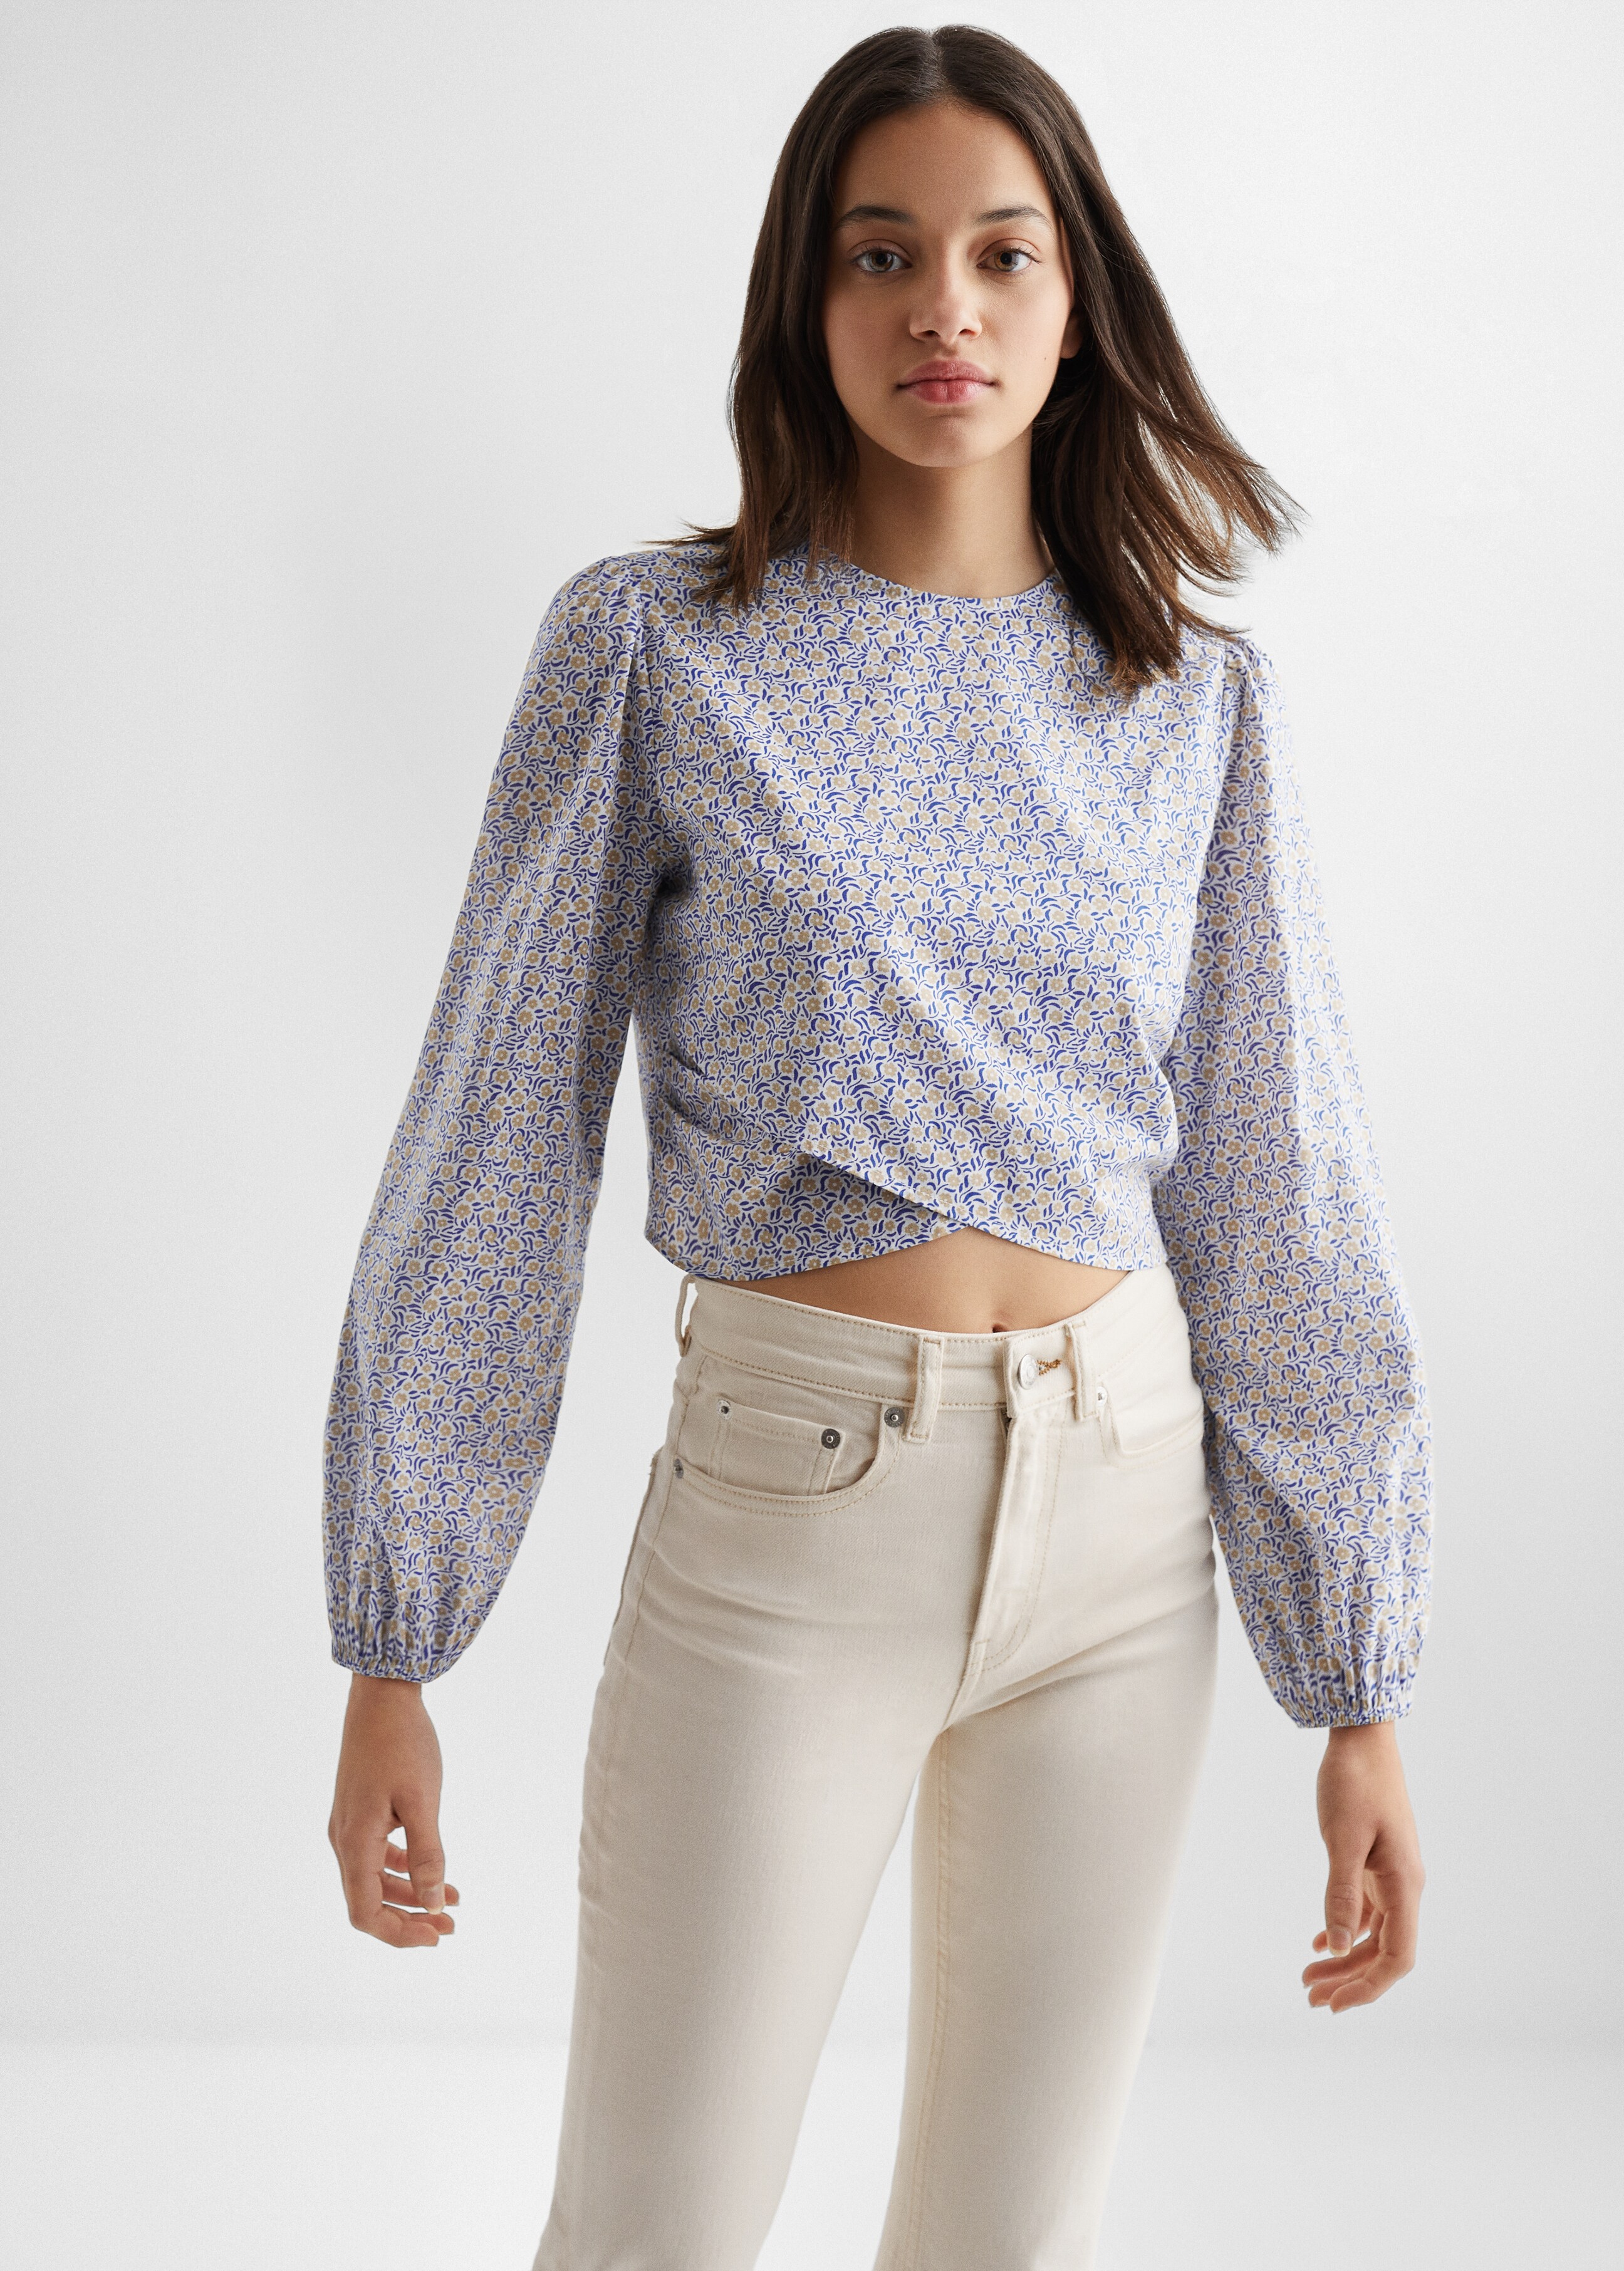  Print blouse - Medium plane